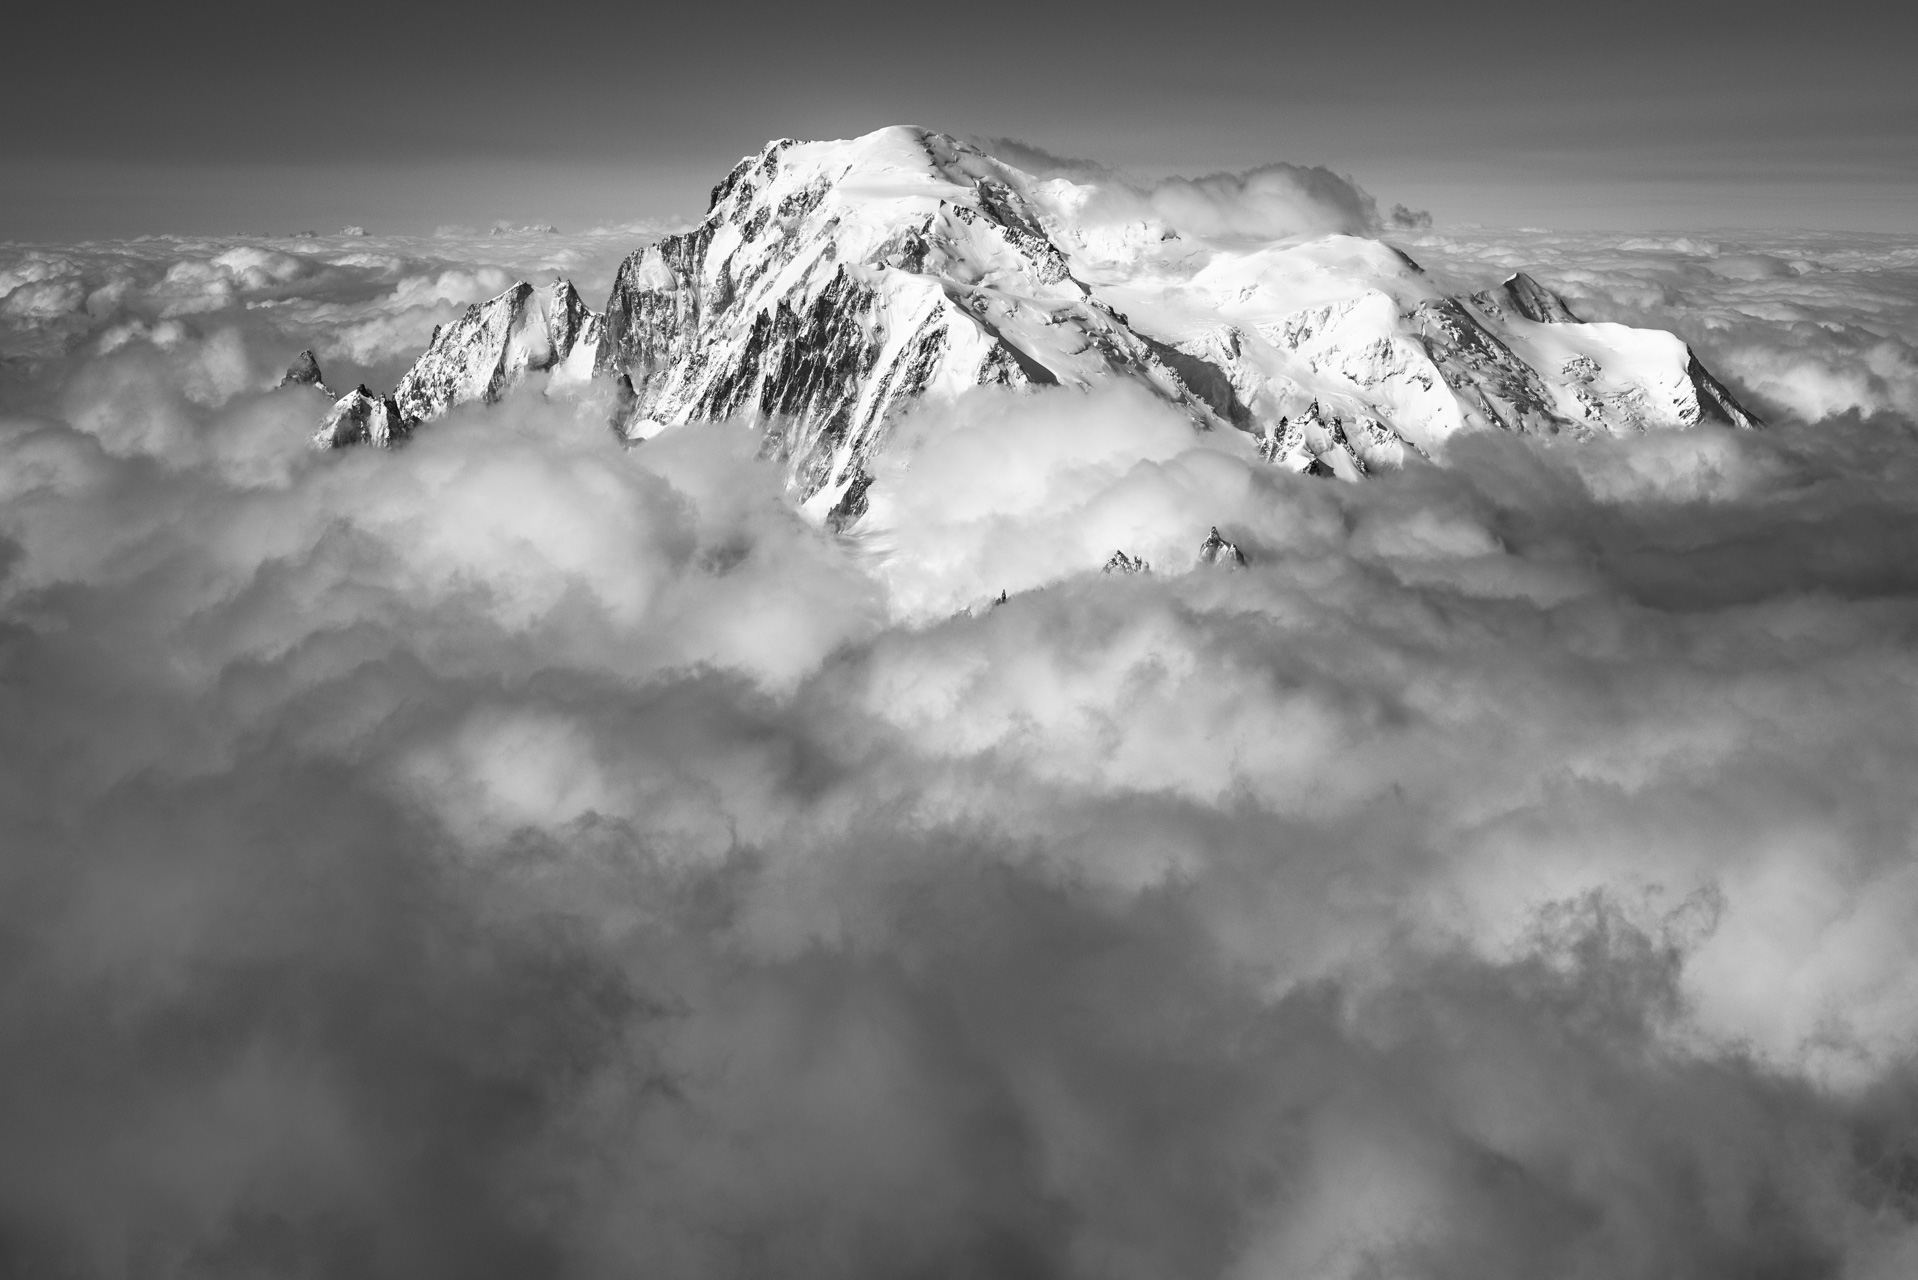 black and white mountain photo - mont-blanc massif - artistic photo alps mountains